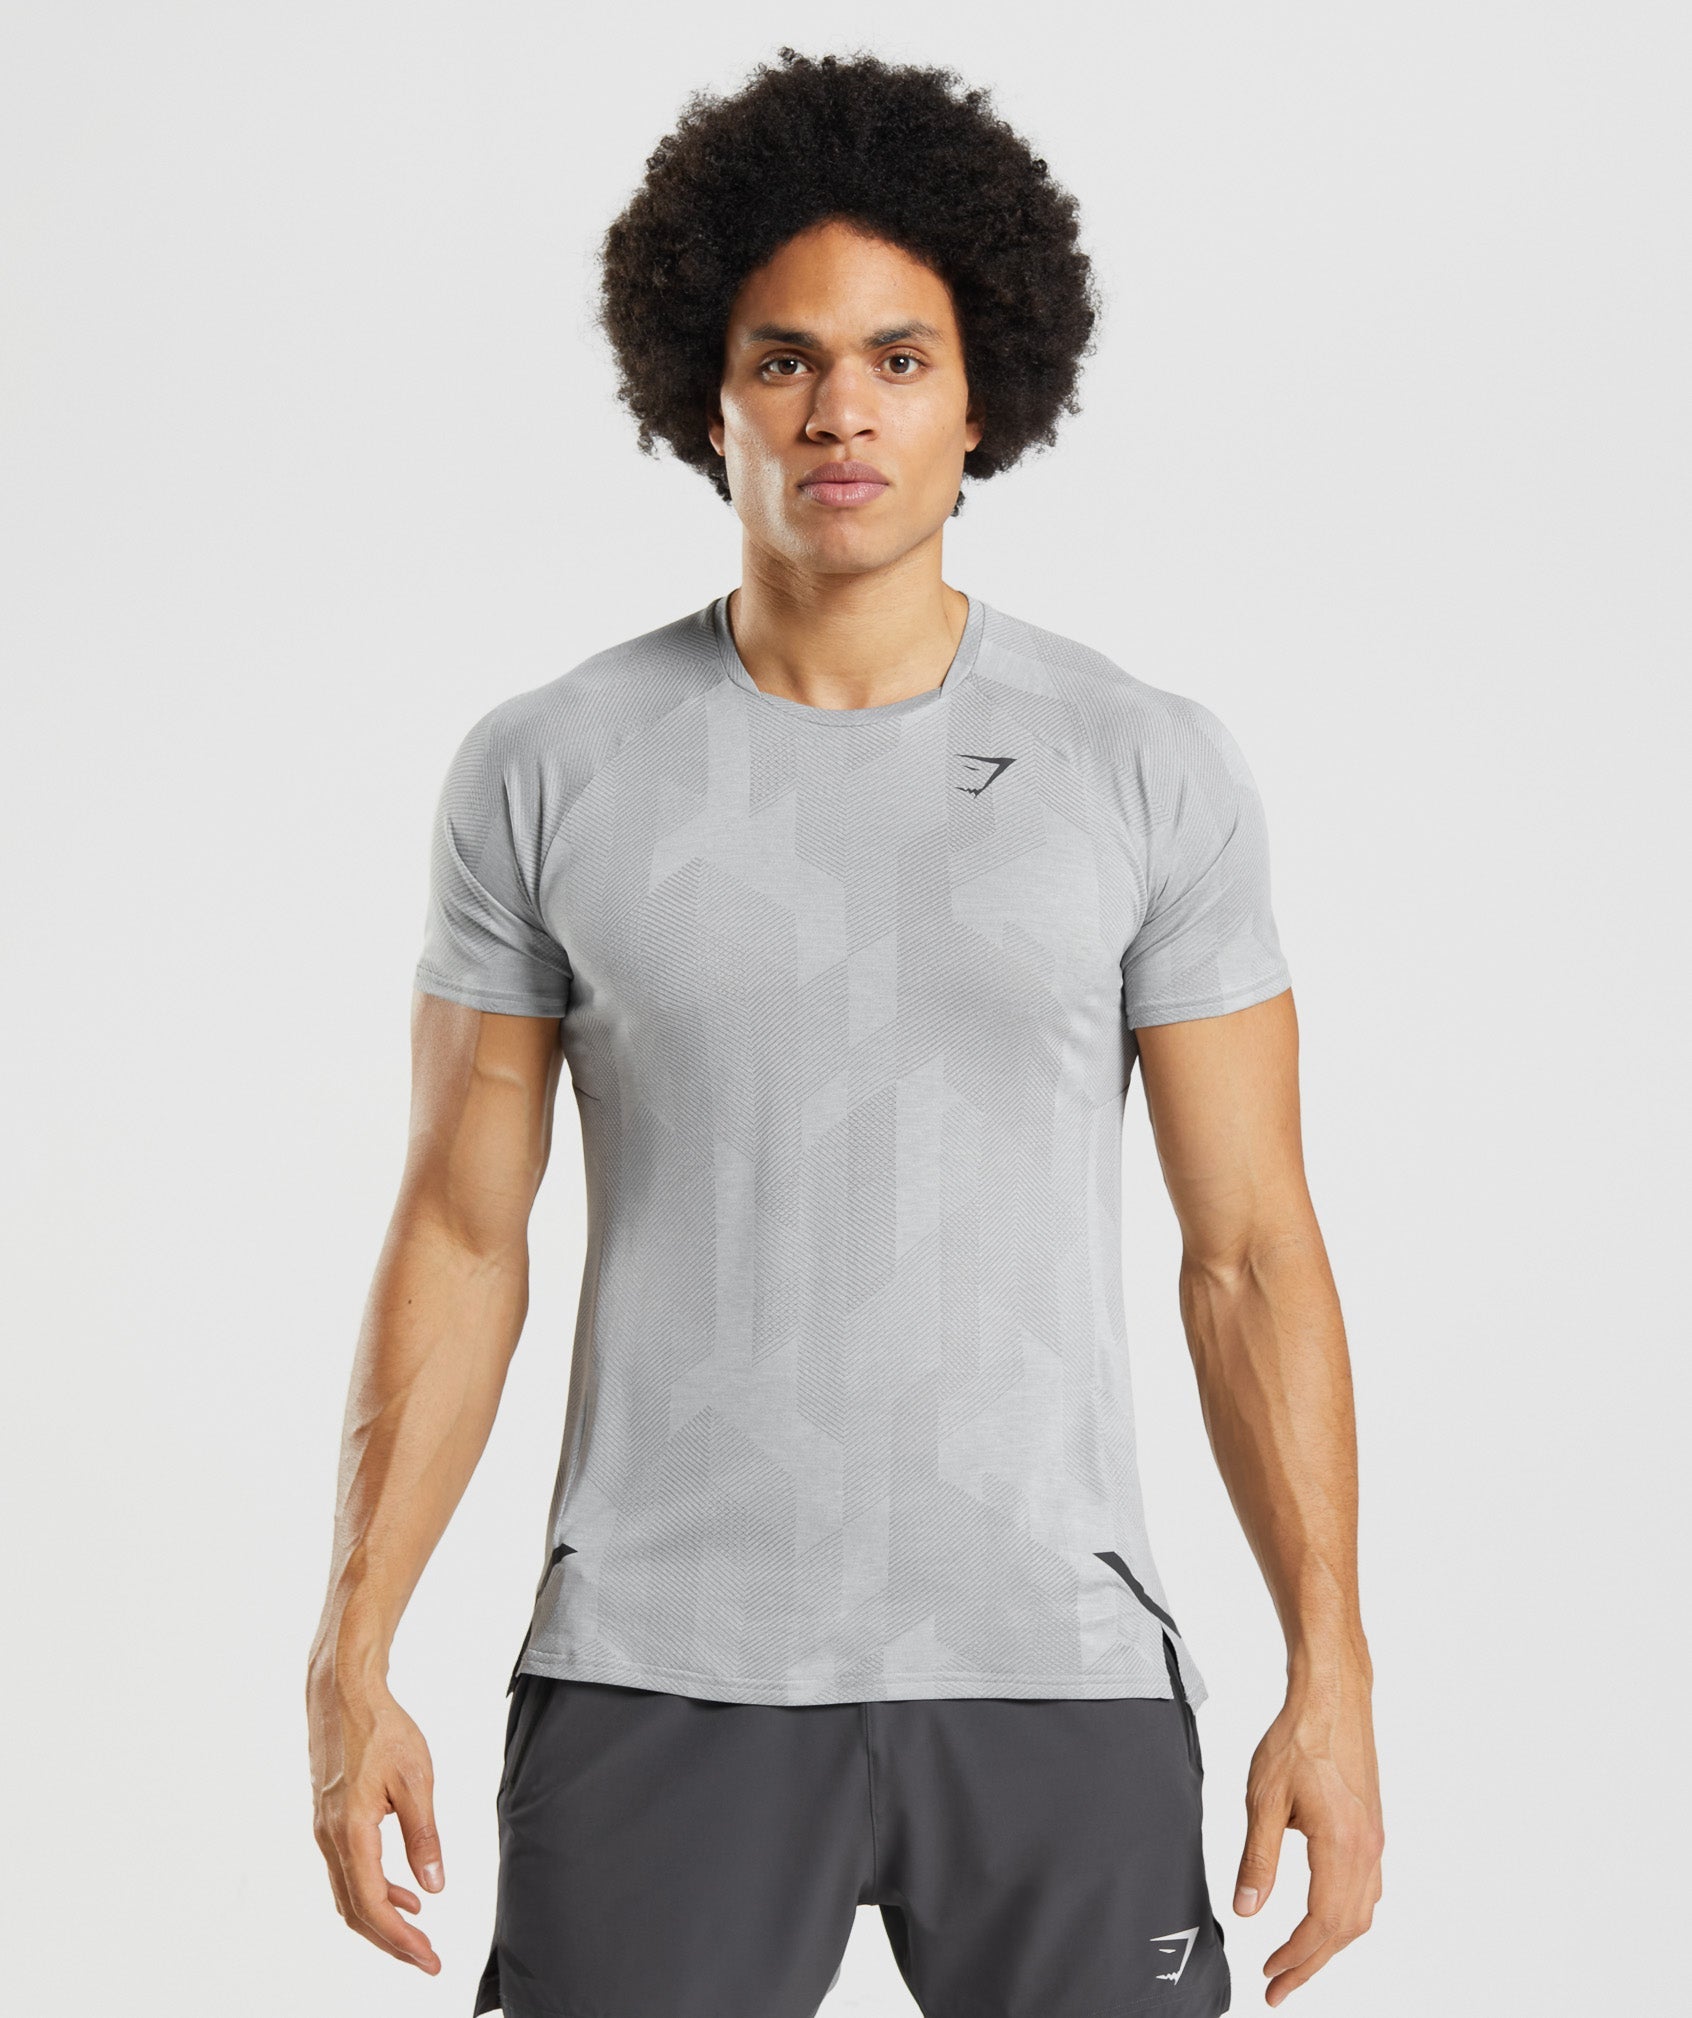 Apex T-Shirt in Smokey Grey/Light Grey - view 2